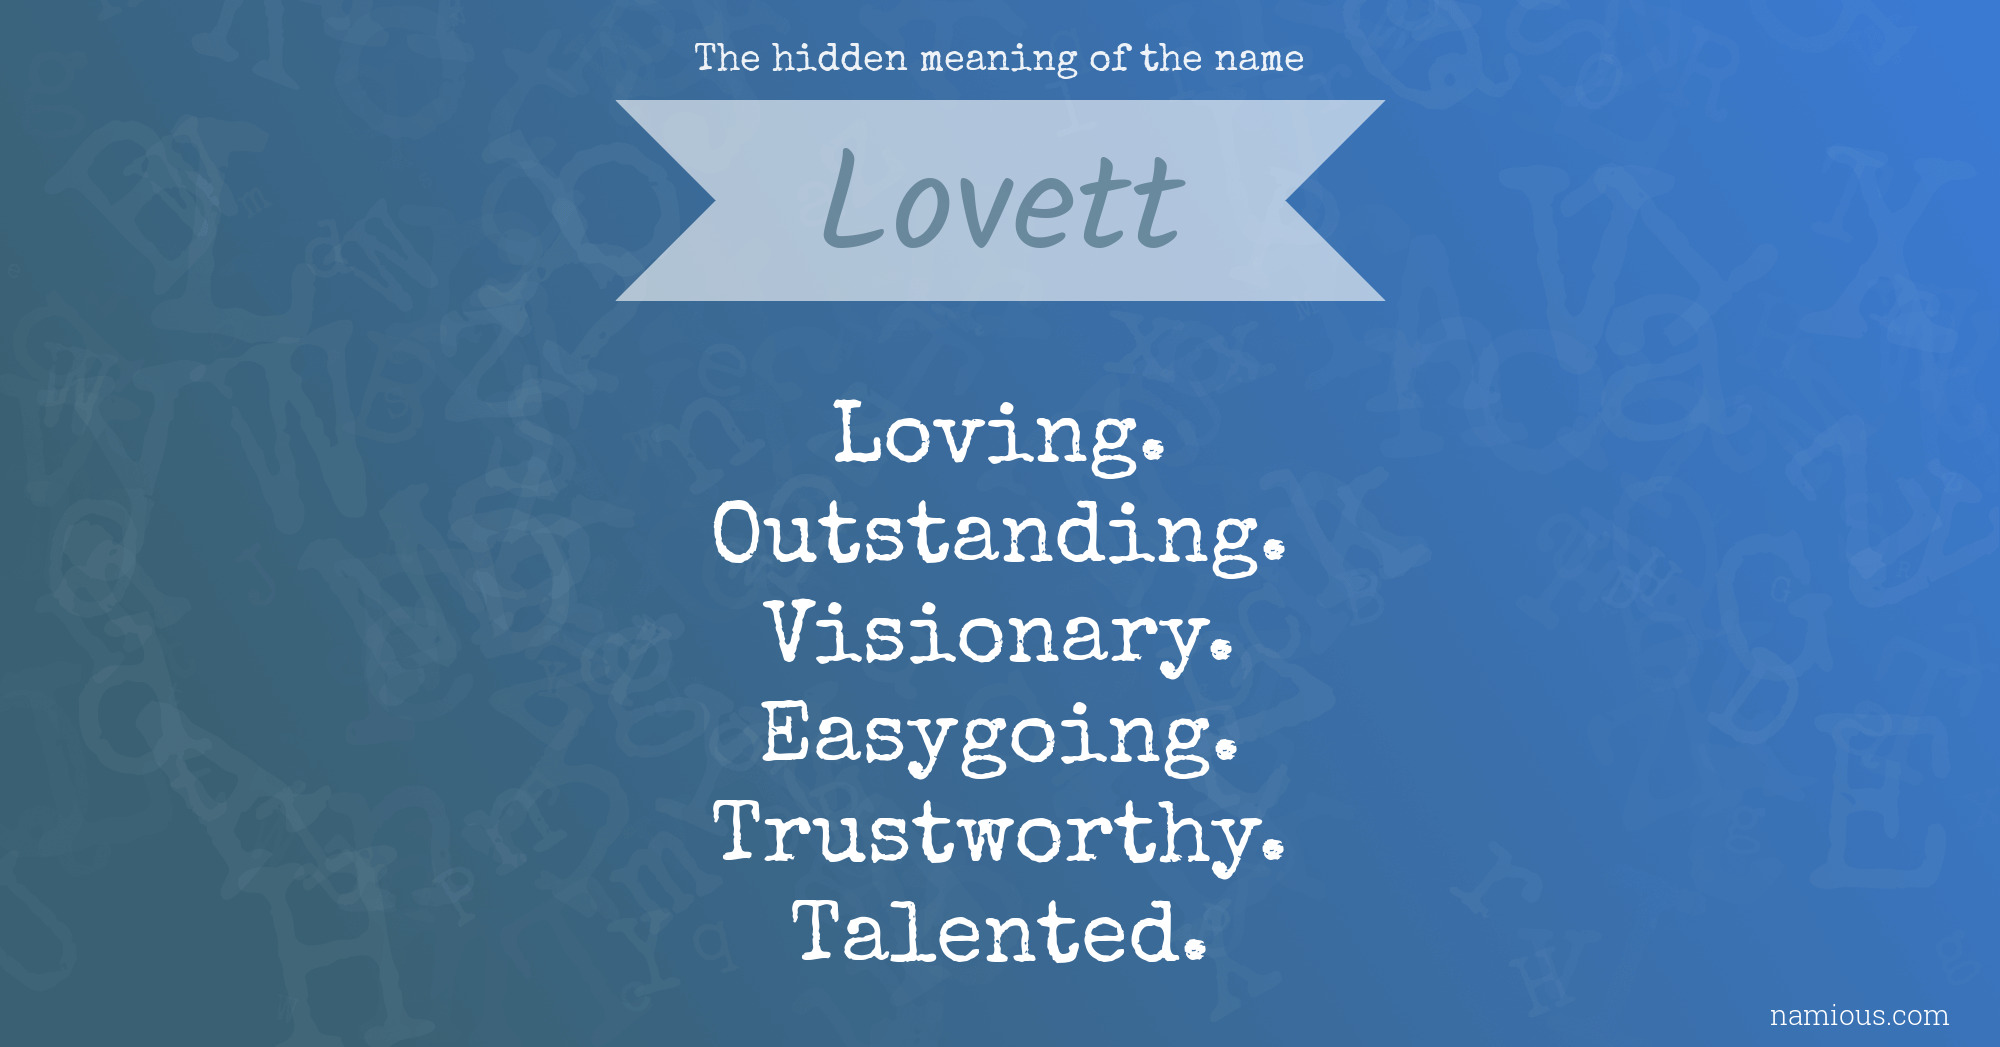 The hidden meaning of the name Lovett